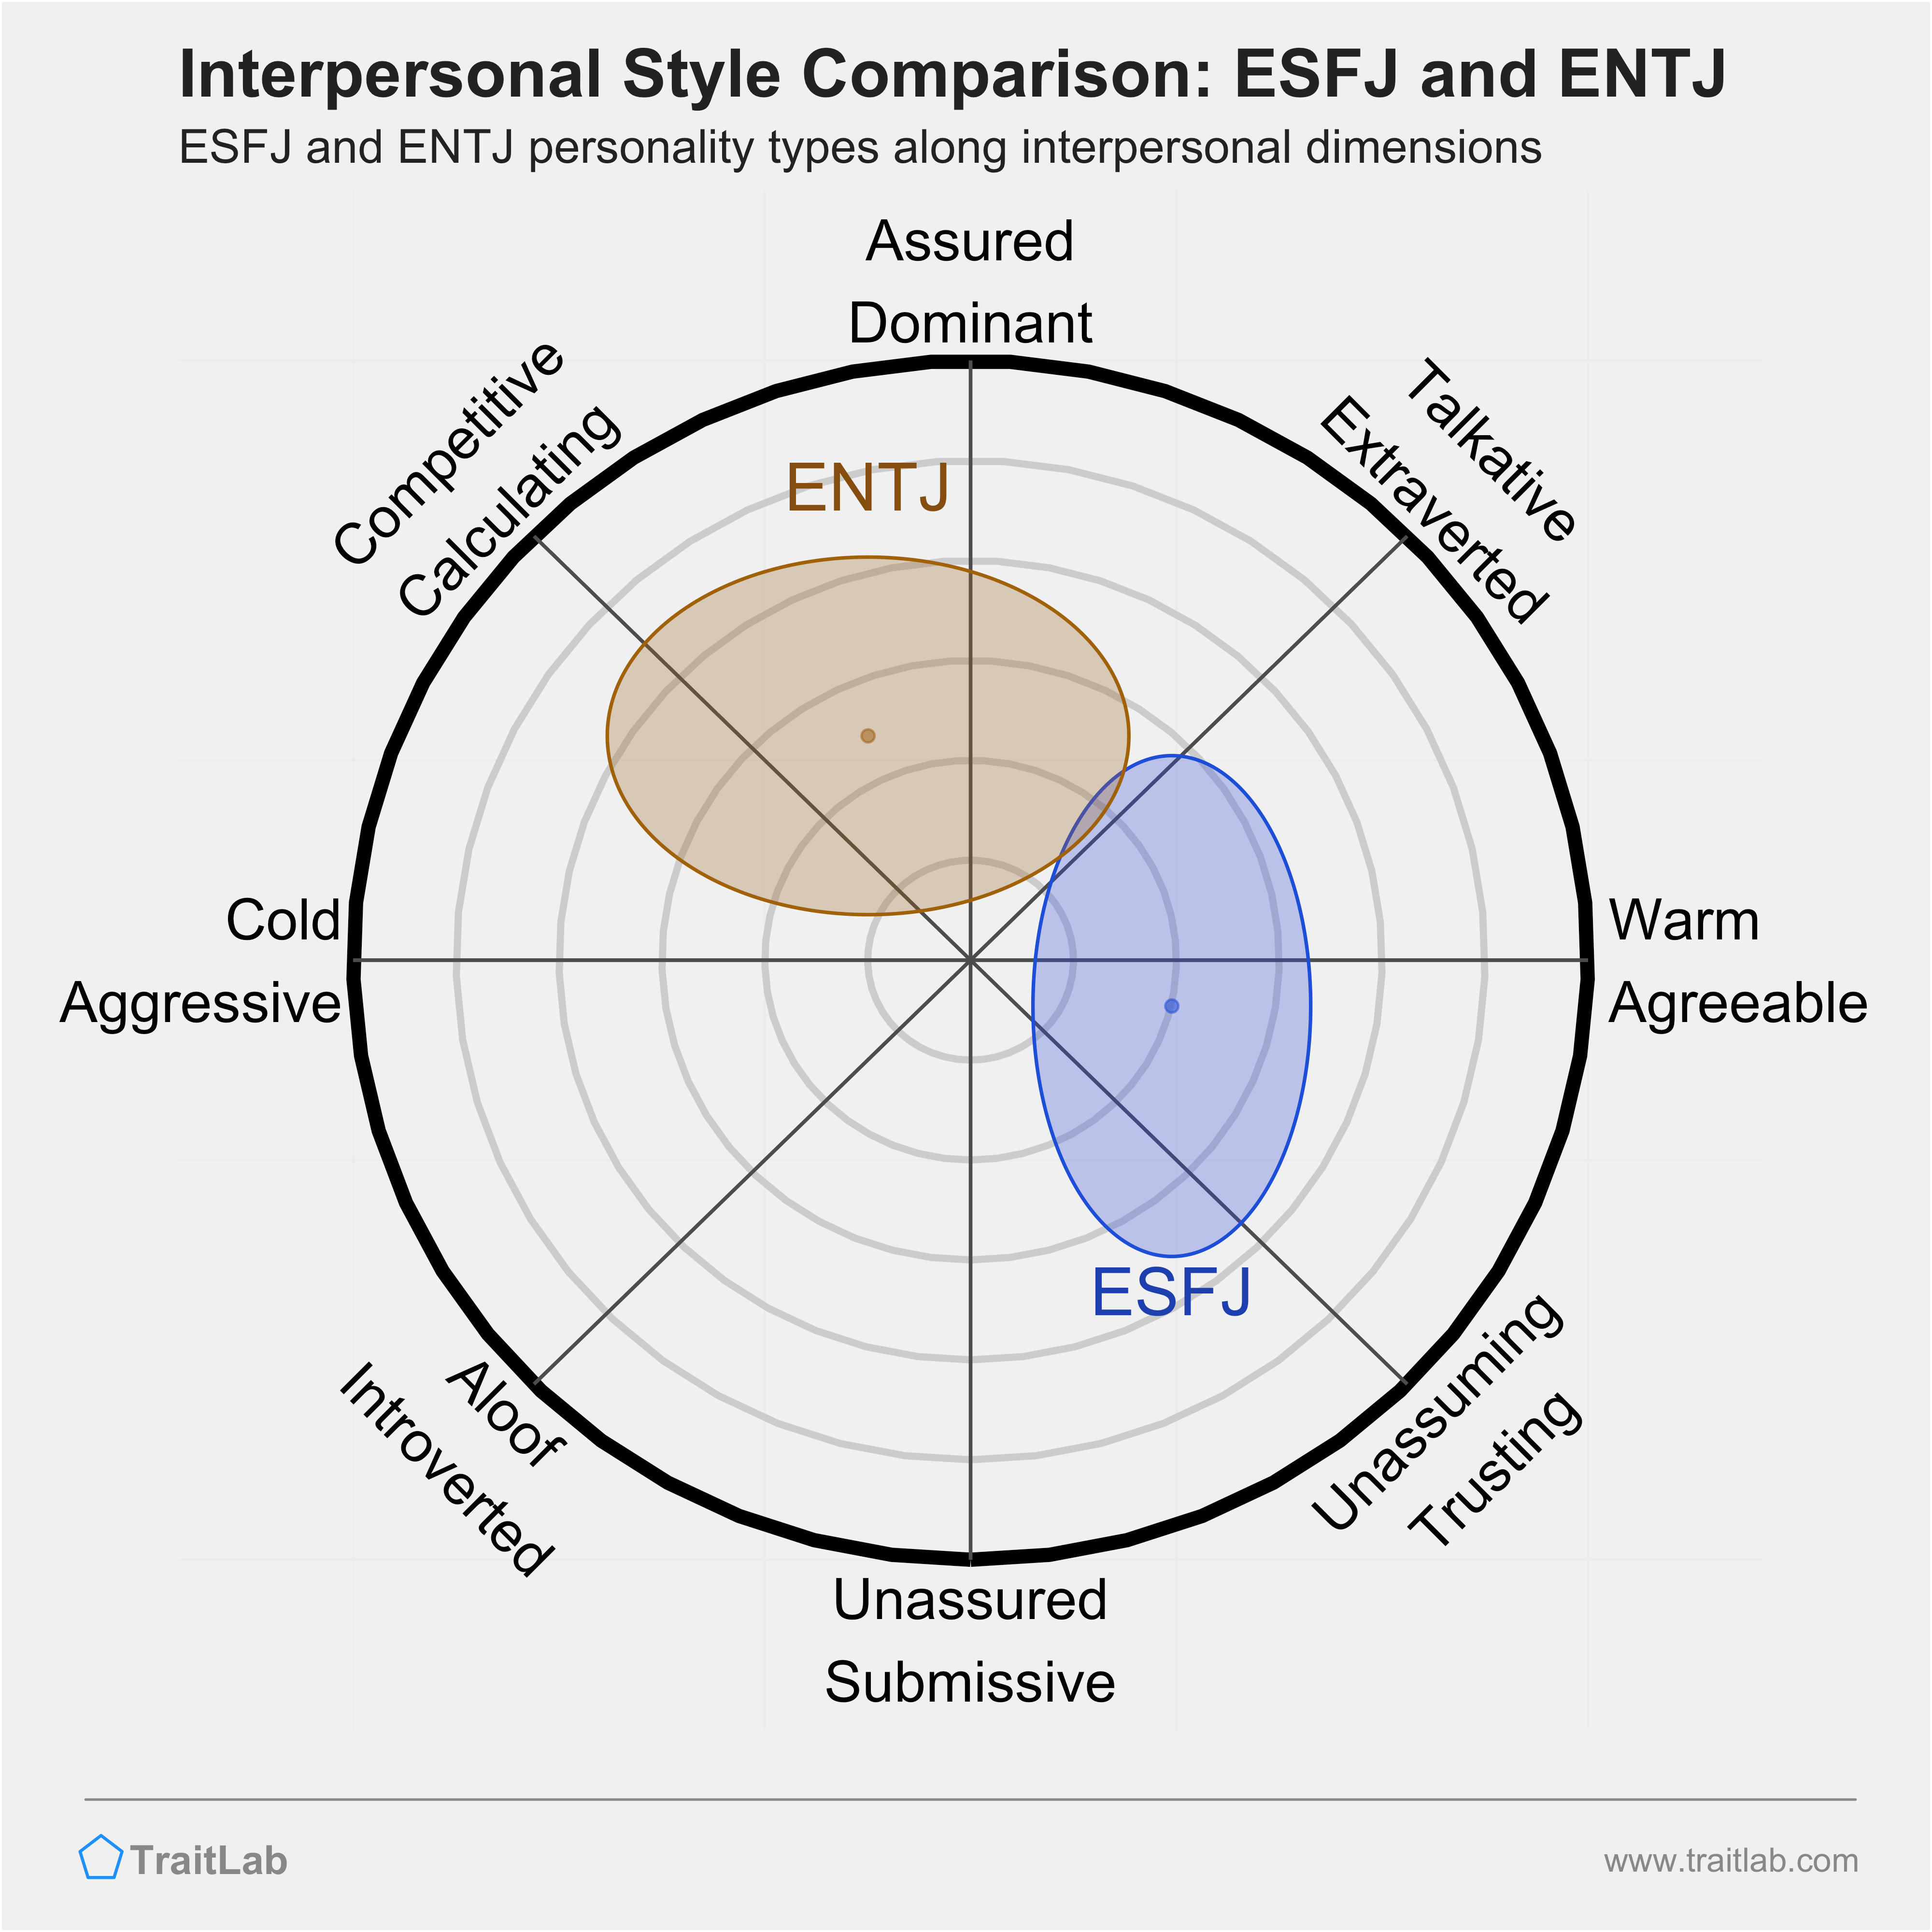 ESFJ and ENTJ comparison across interpersonal dimensions